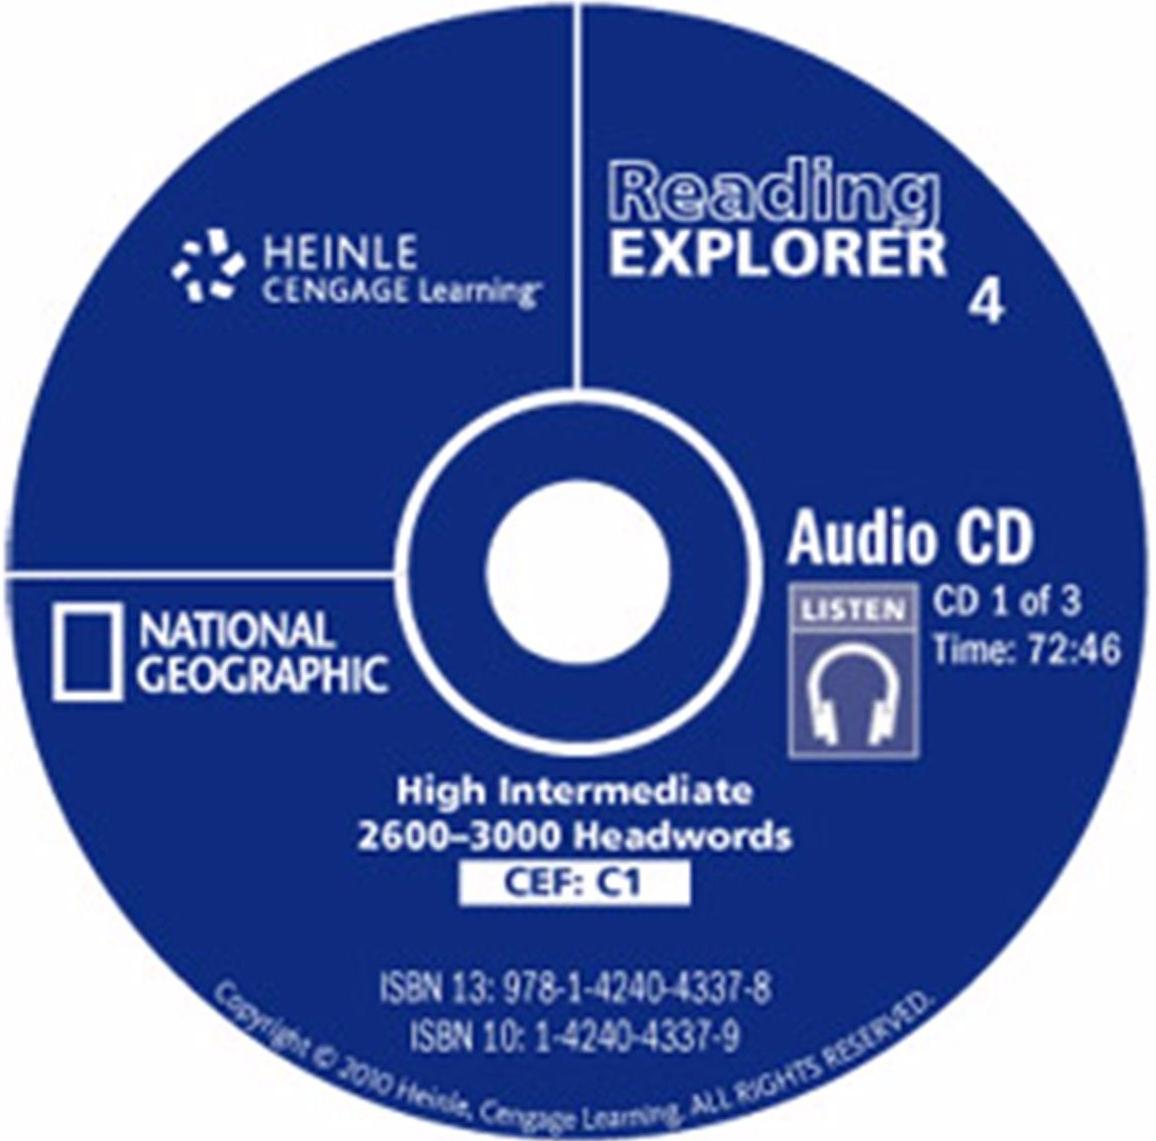 READING EXPLORER 4 Audio CD(x1)